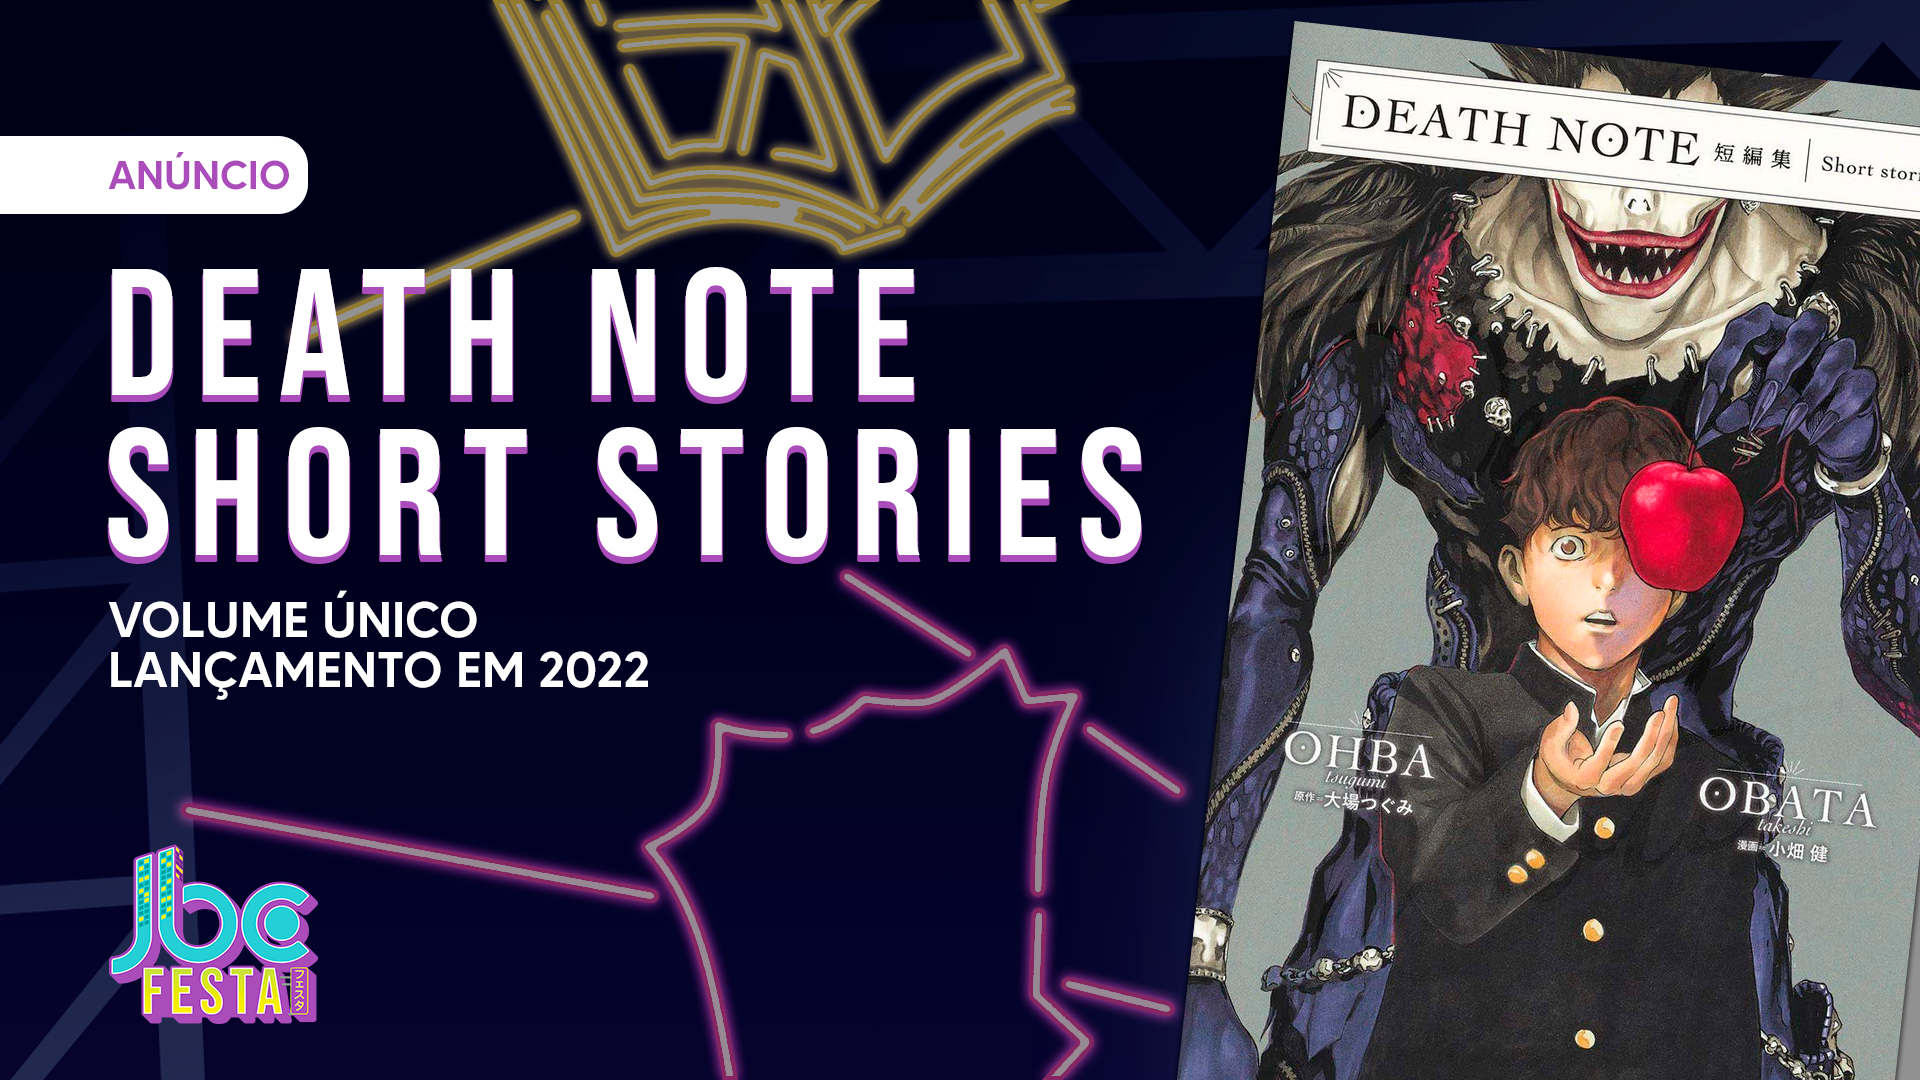 Death Note - Mangá será publicado em formato digital pela JBC